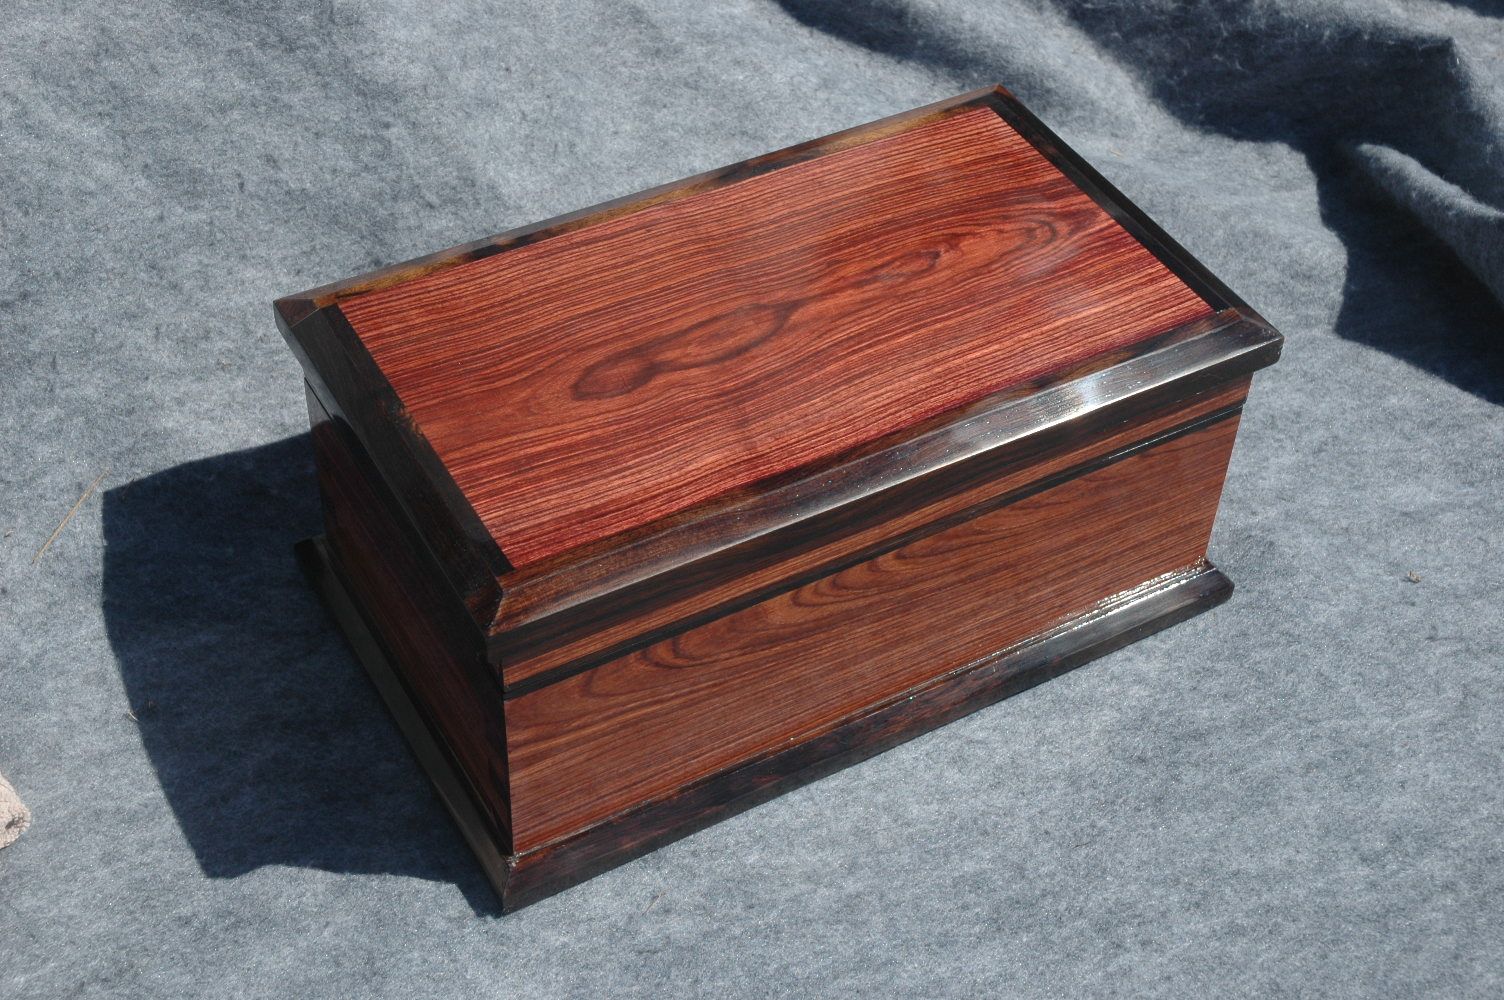 custom handcrafted wood box kingwood ebony trim and tray top front